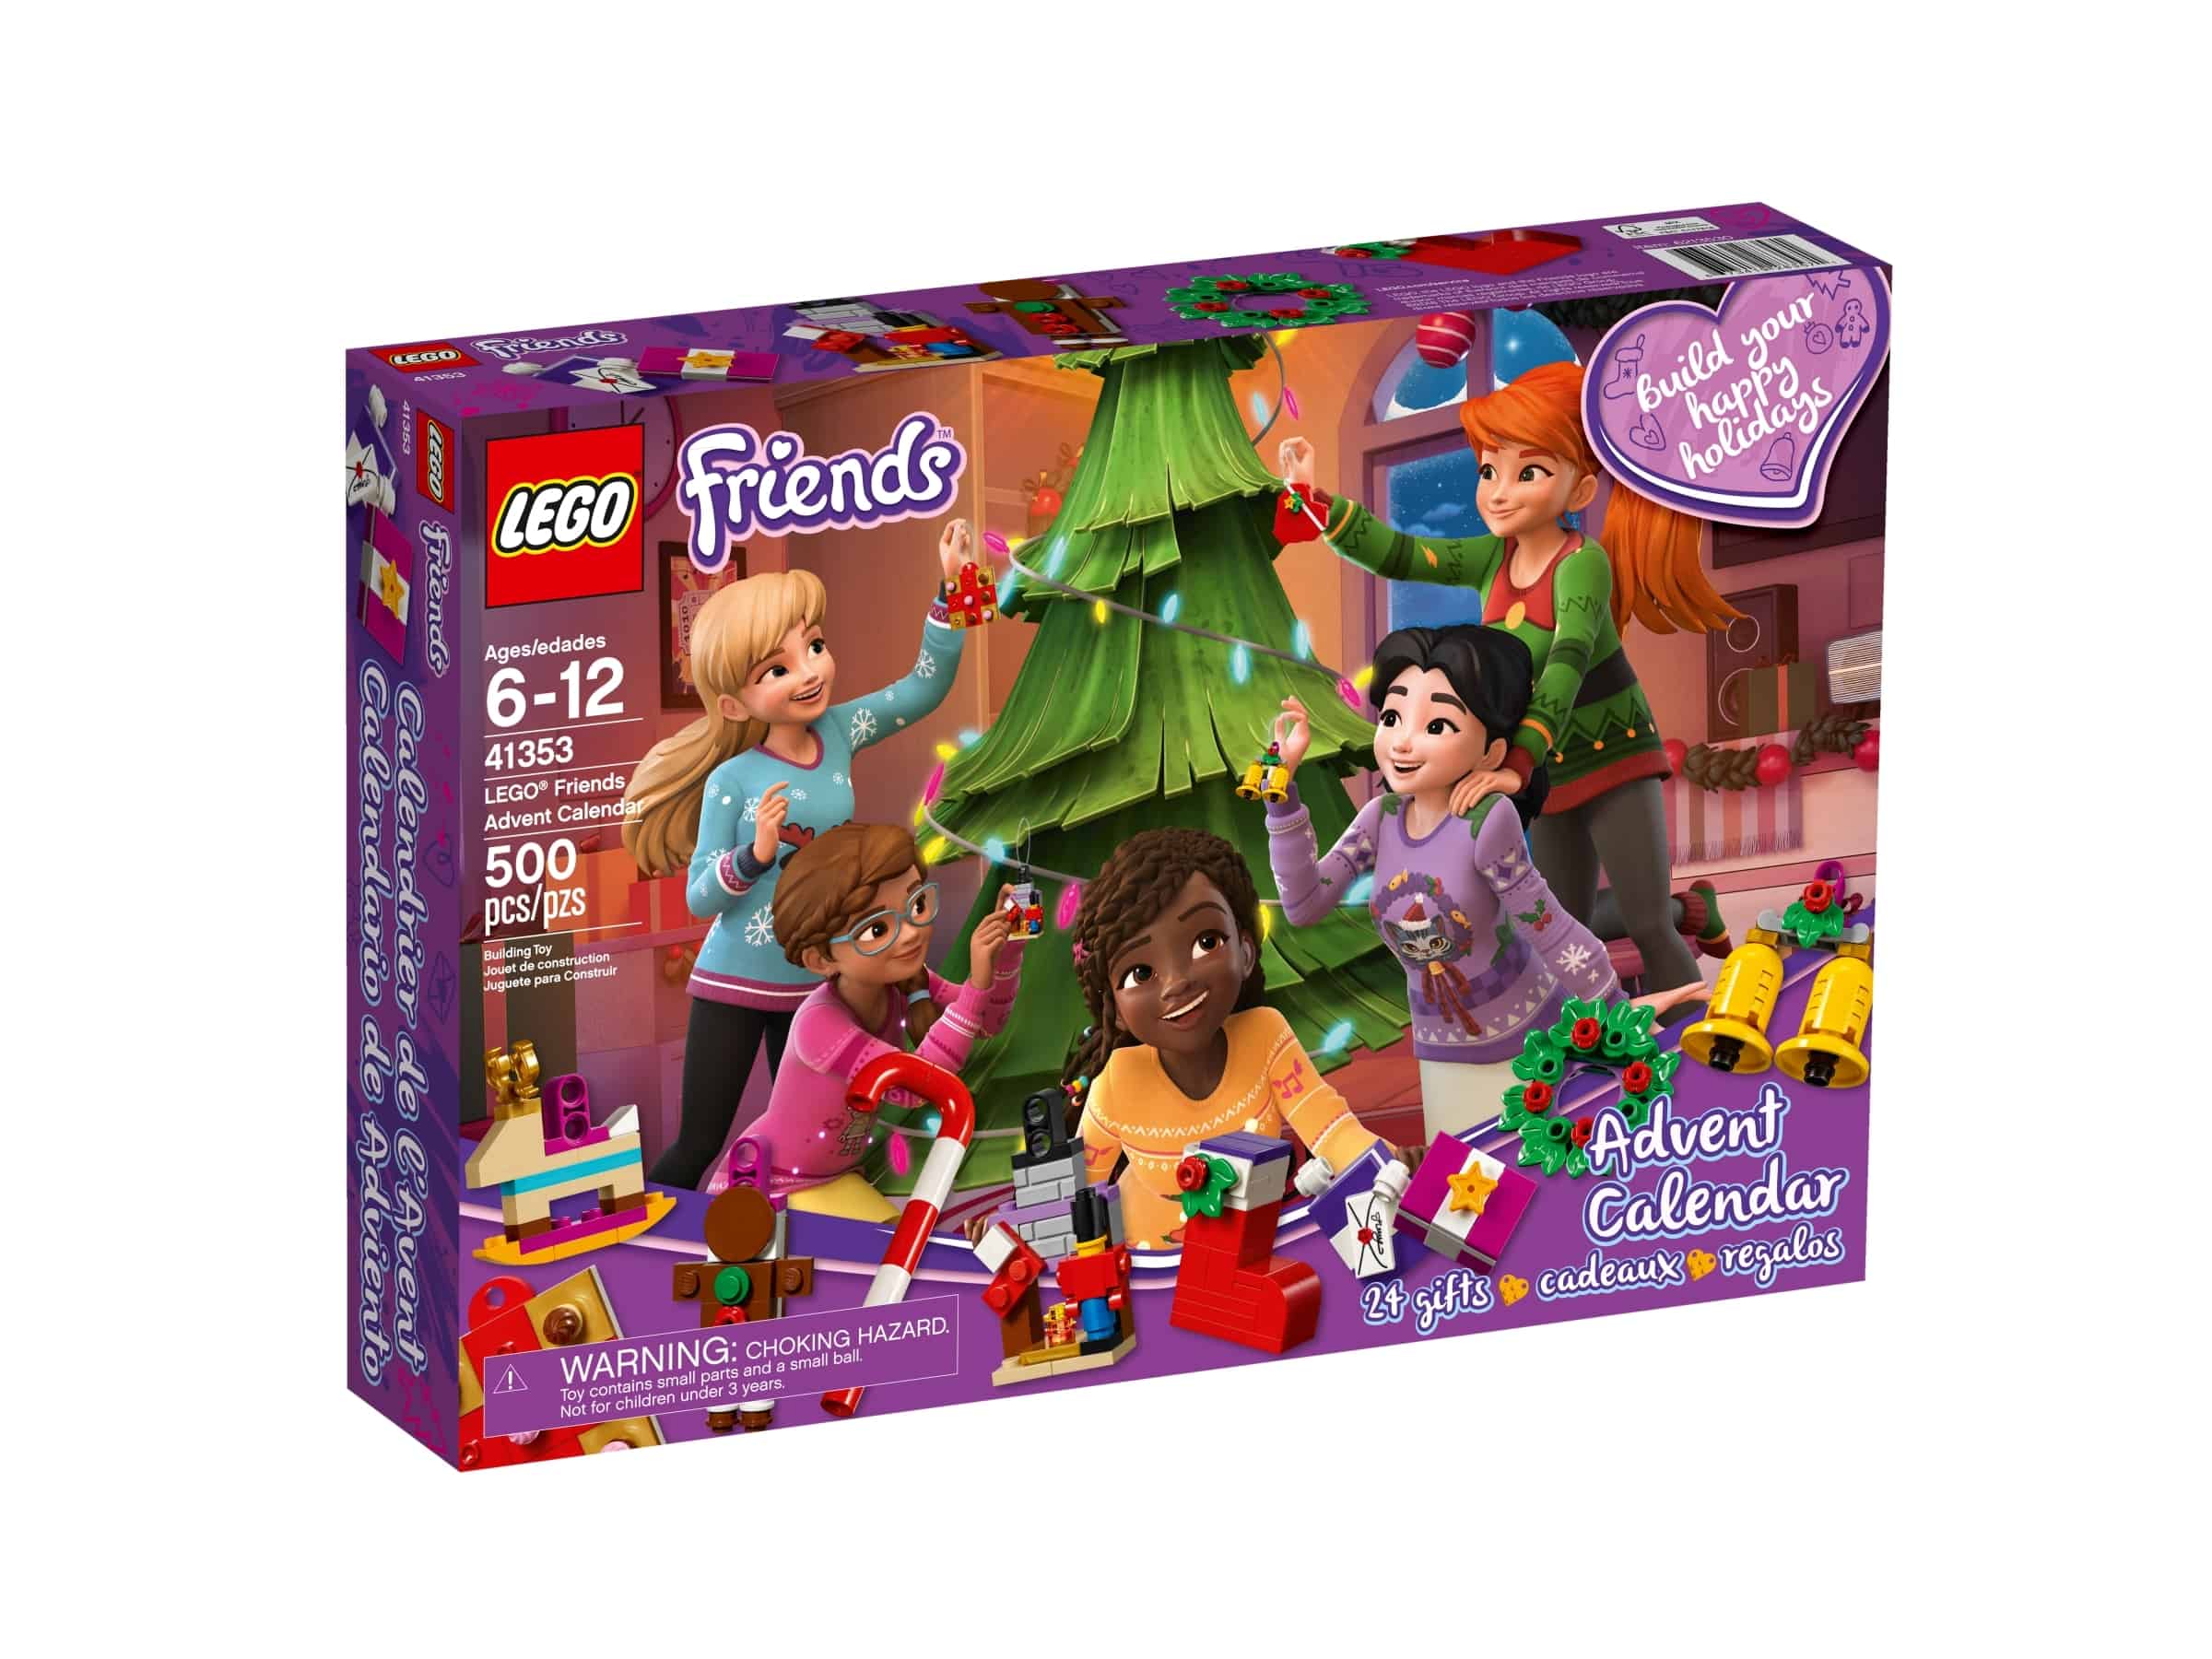 Lego Friends Adventkalender 41353